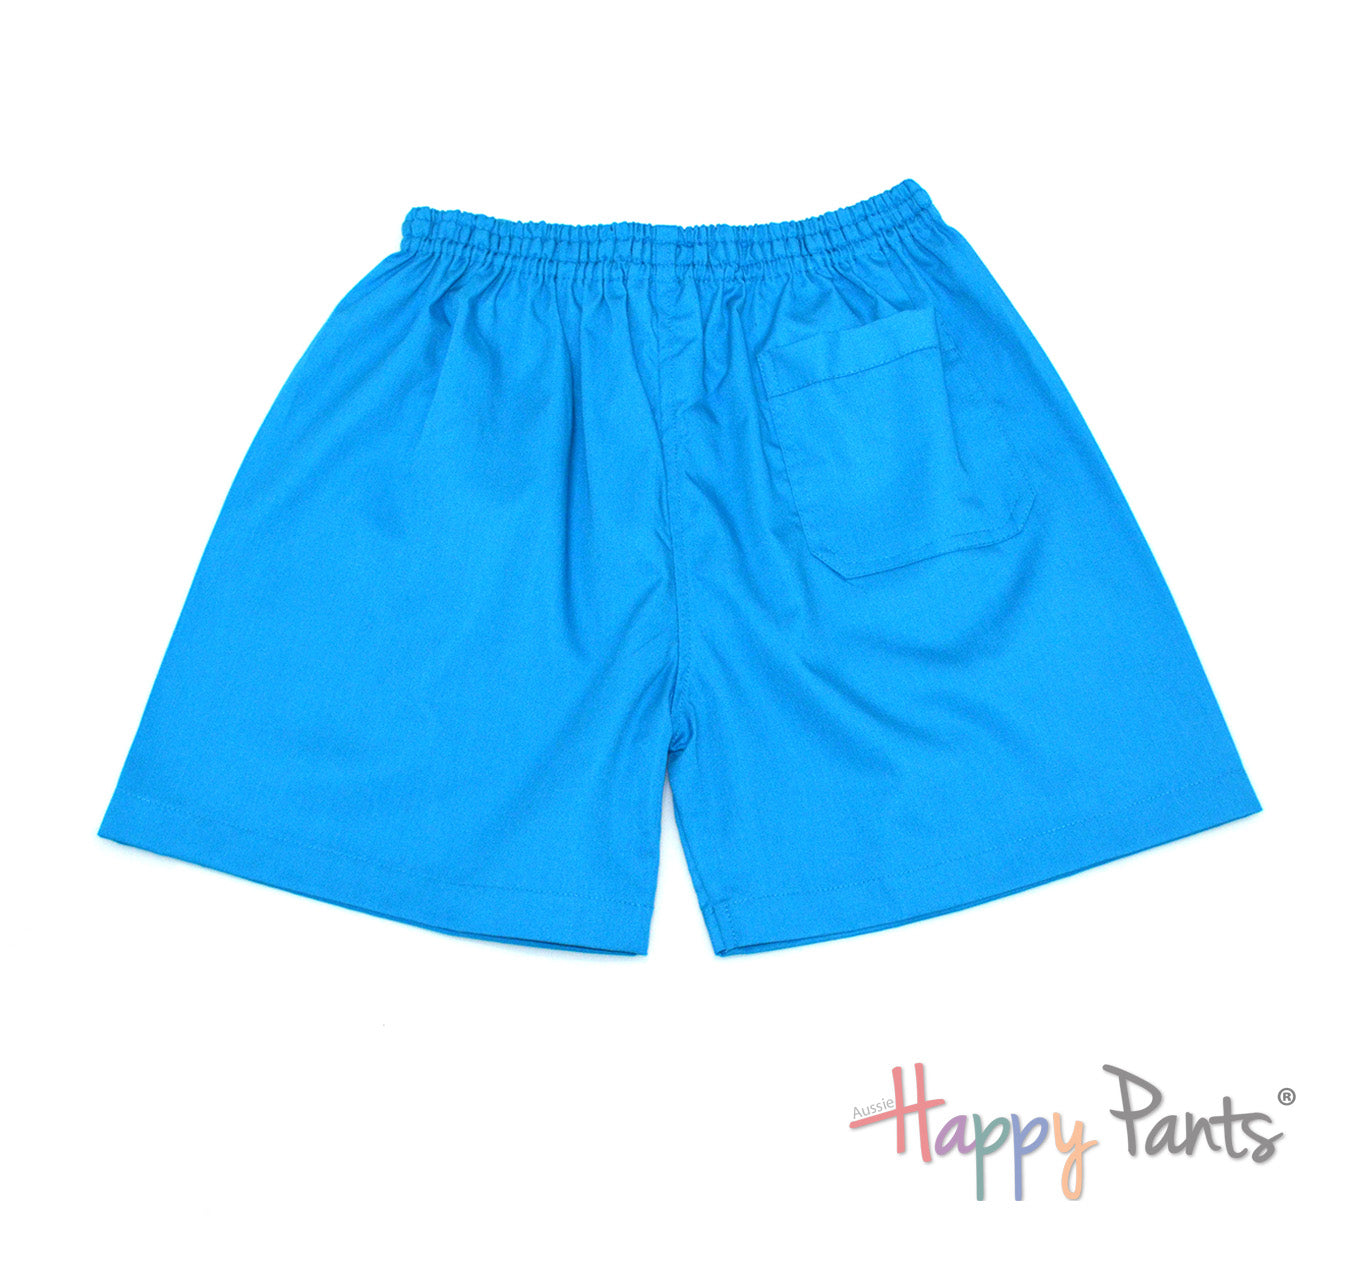 Blue Aqua shorts with elastic waist holiday pants resort wear Australia comfy  bordies